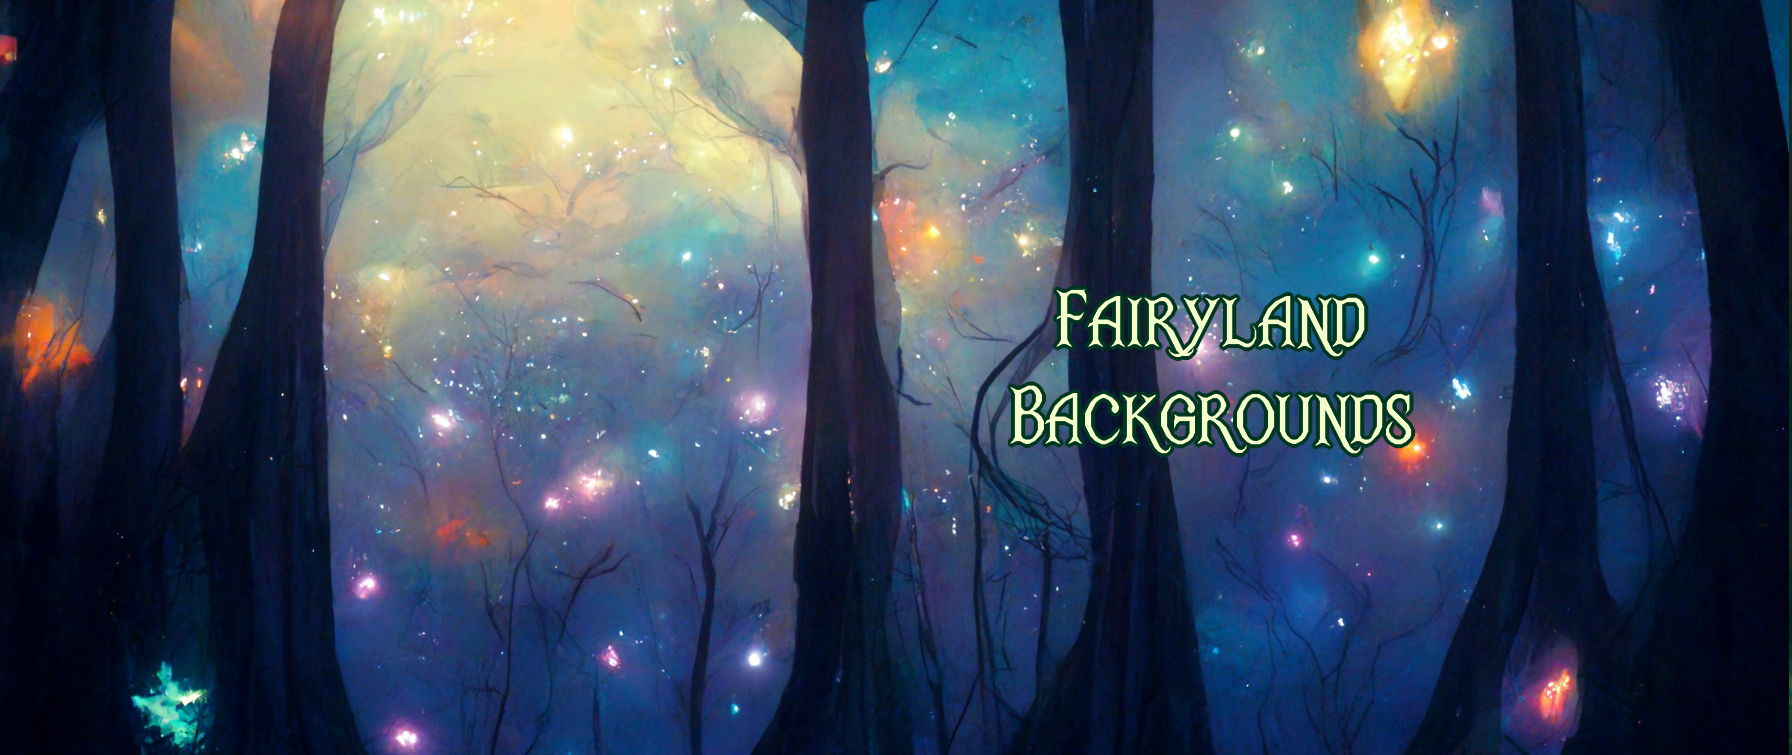 Fairyland Backgrounds